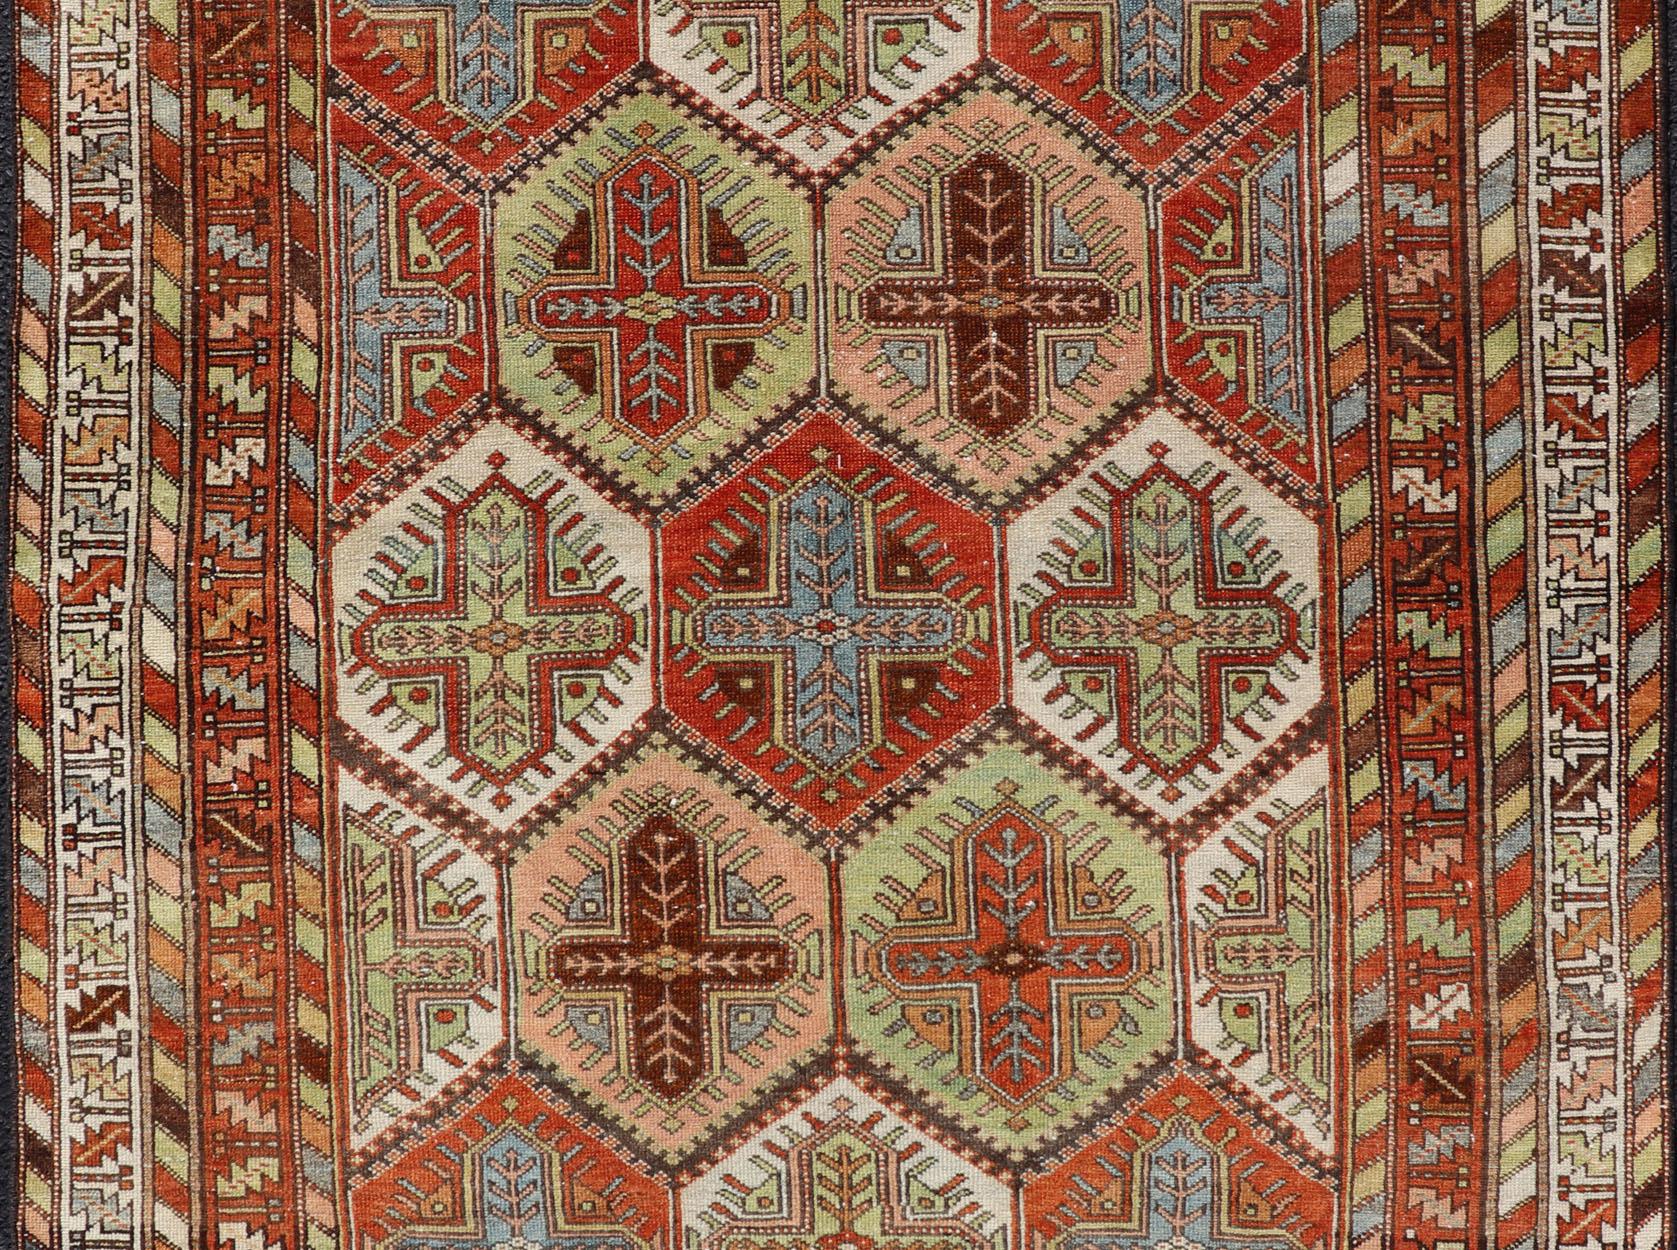 Antique Persian Tribal Motif Design with Crosses Bakhtiari Rug in Multi Colors For Sale 4